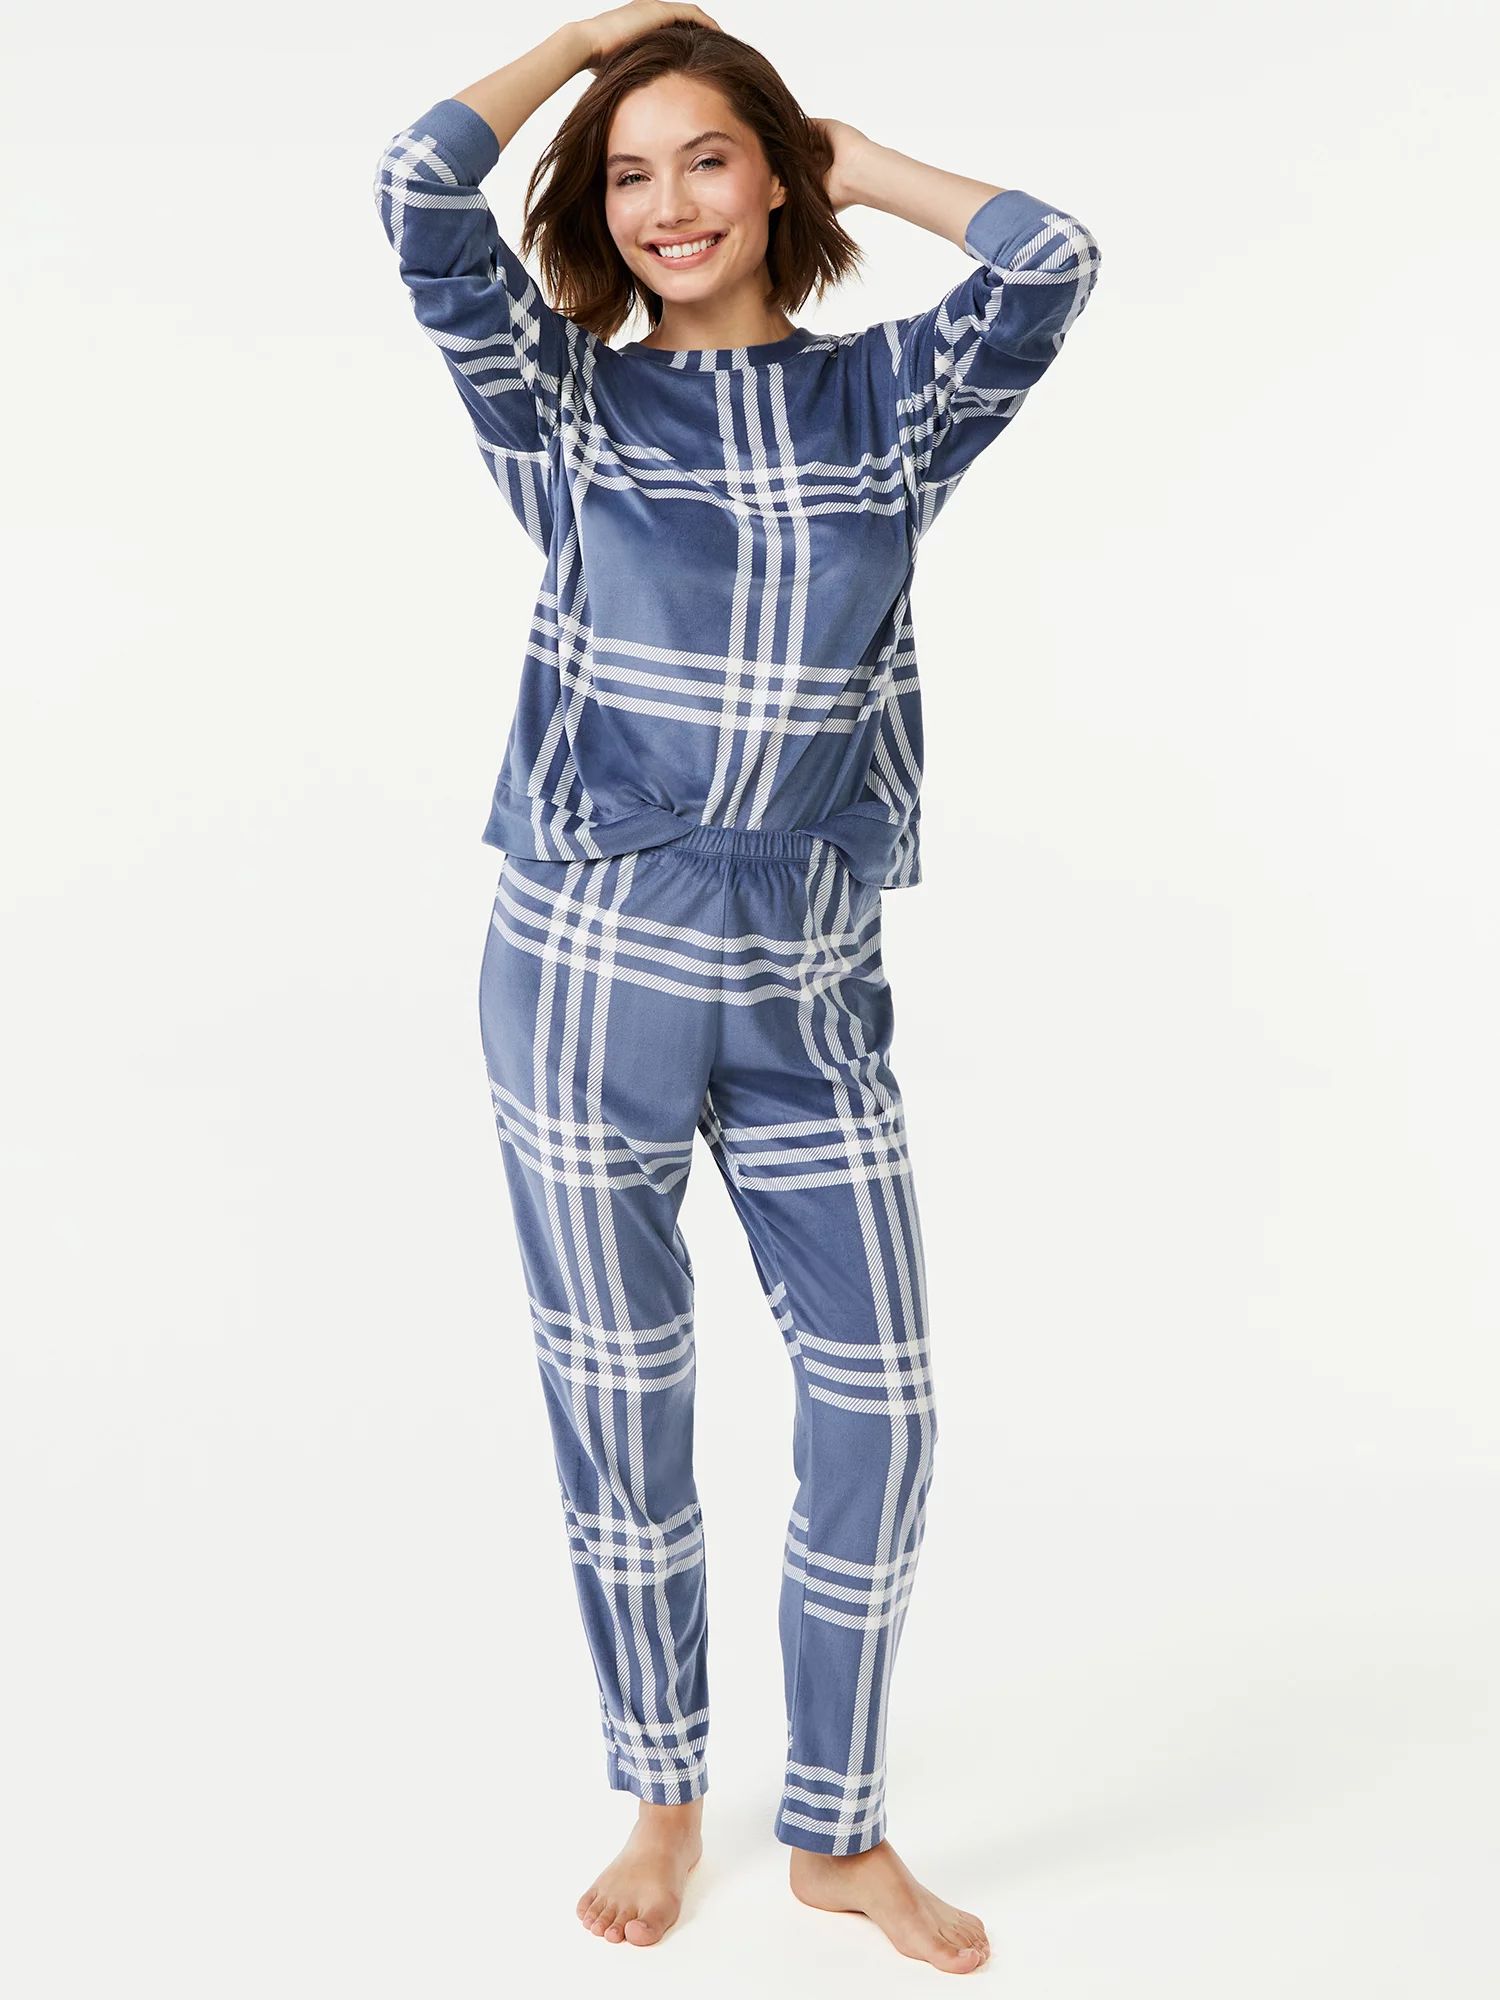 Joyspun Women's Velour Top and Sleep Pant Pajama Set, 2-Piece, Sizes up to 3X | Walmart (US)